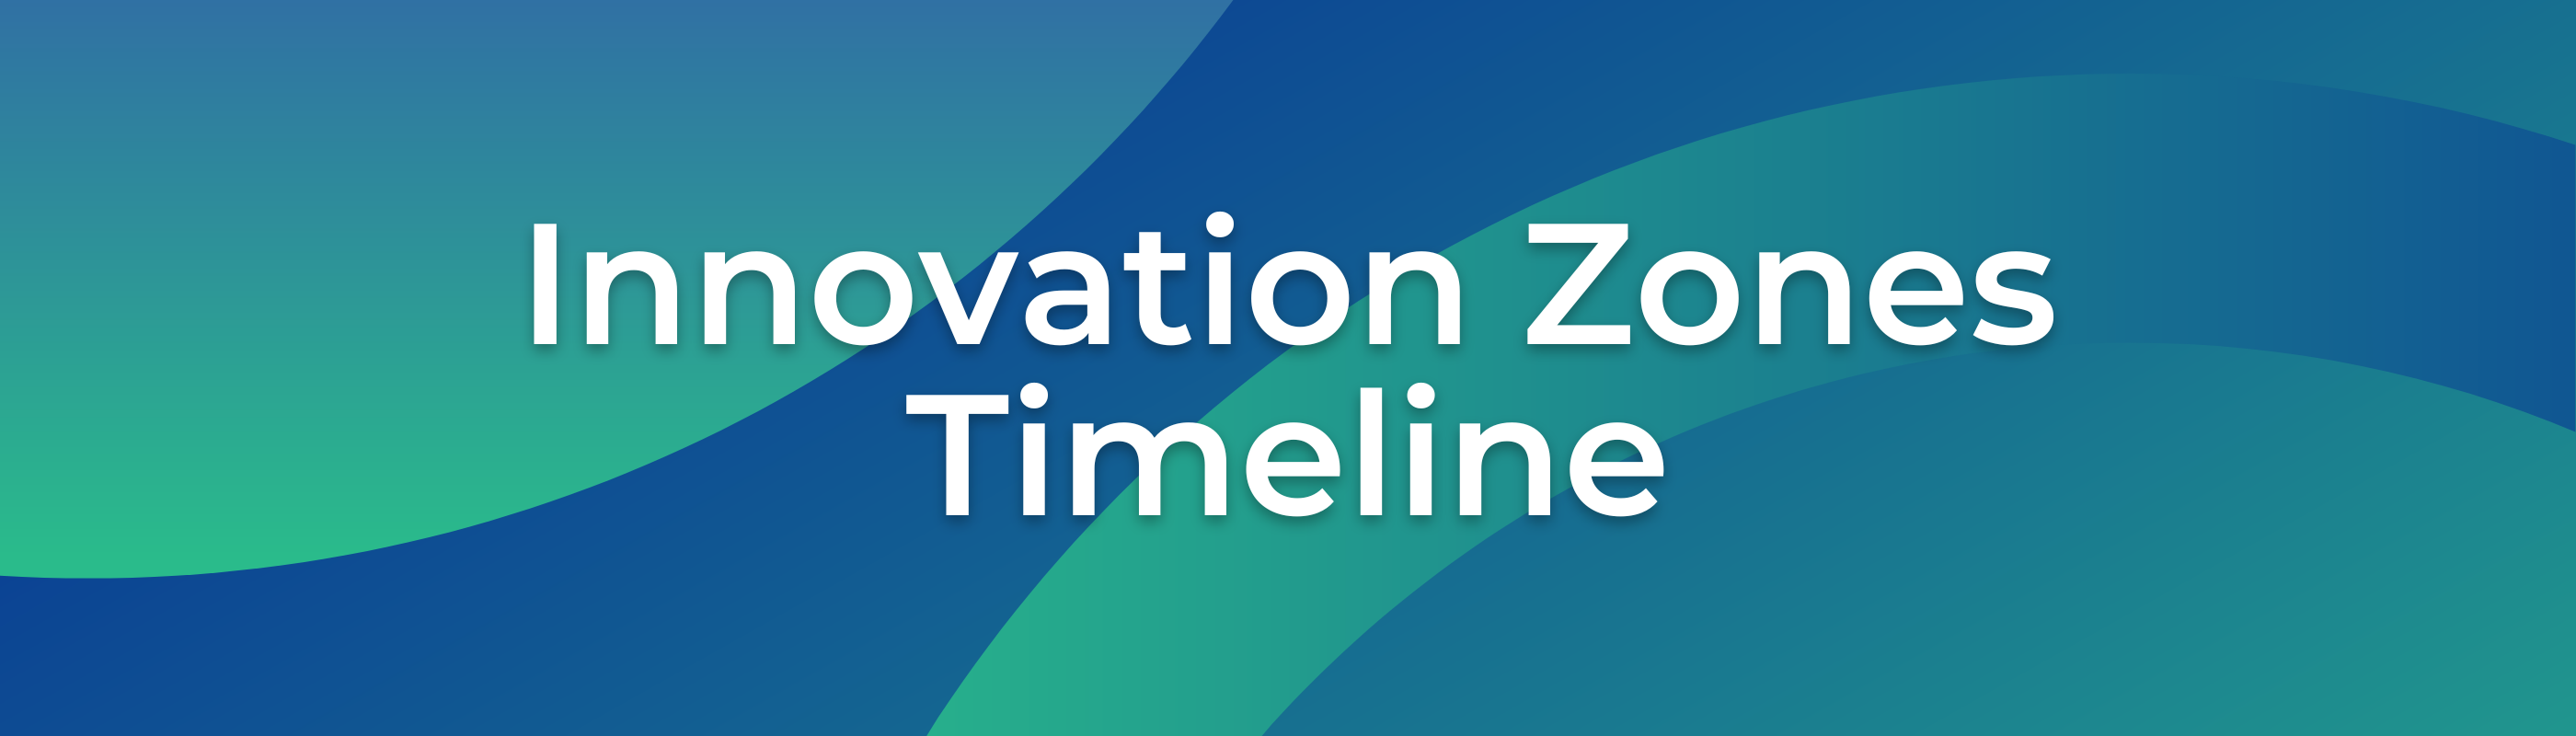 Innovation Zones Timeline